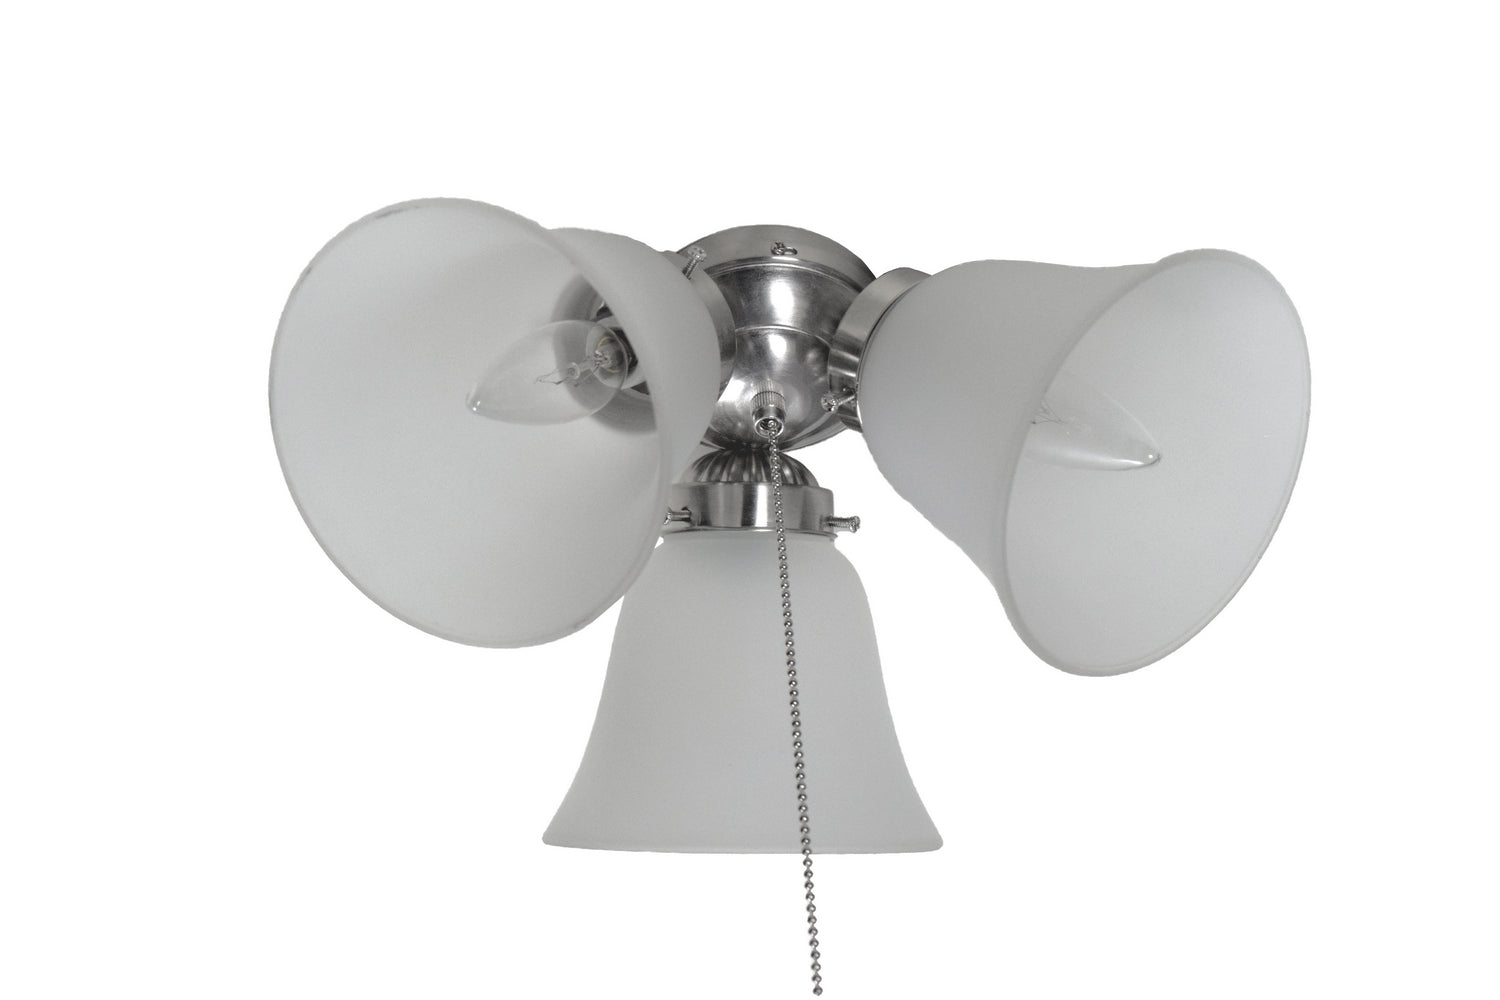 Maxim - Three Light Ceiling Fan Light Kit - Fan Light Kits - Satin Nickel- Union Lighting Luminaires Decor